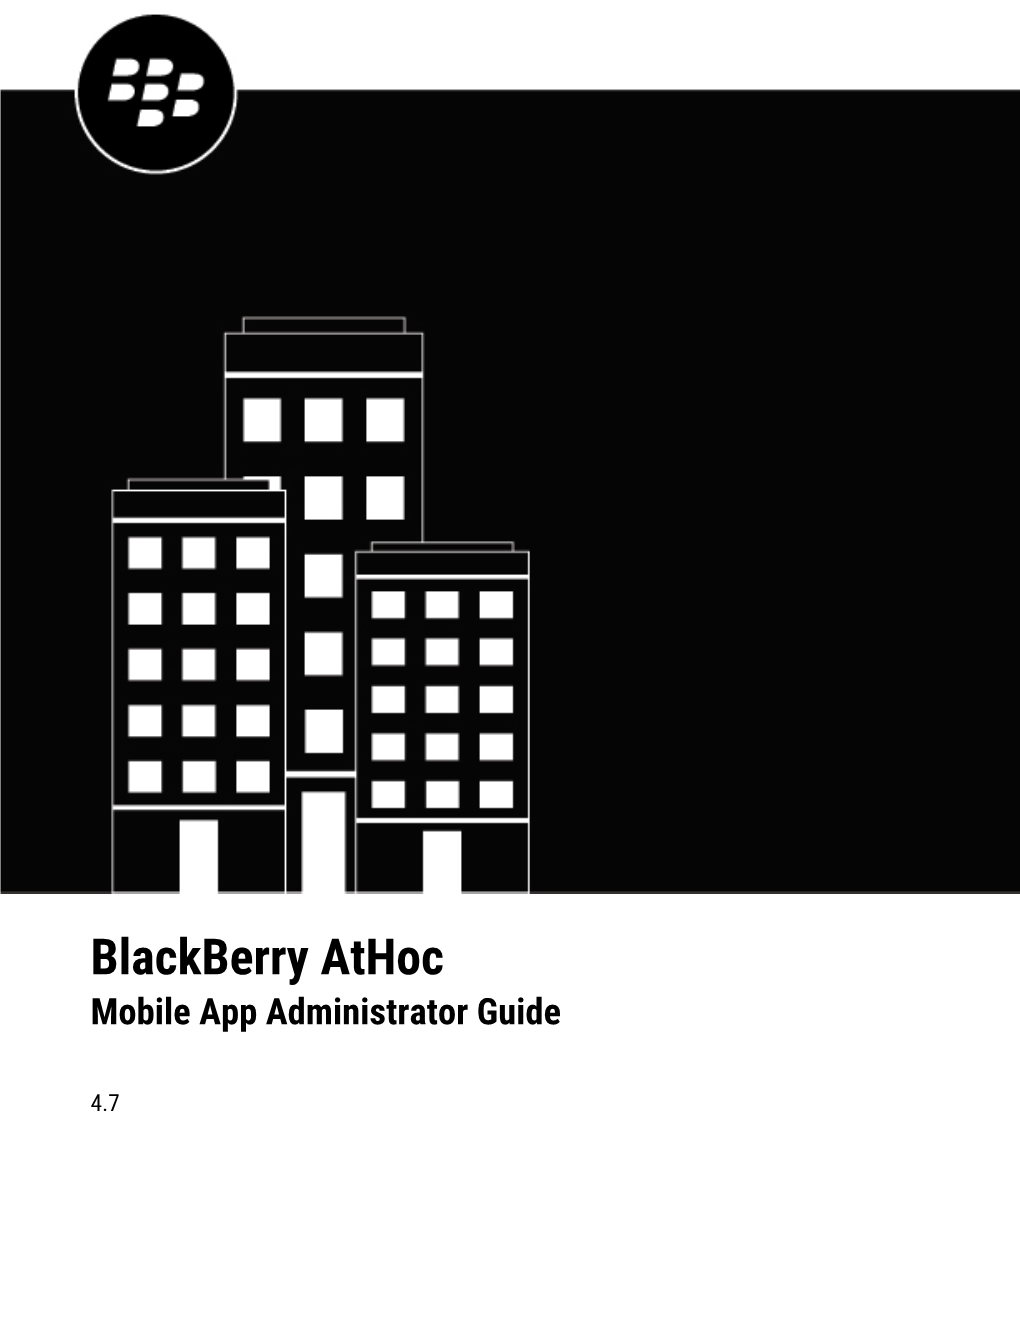 Blackberry Athoc Mobile Administrator Guide